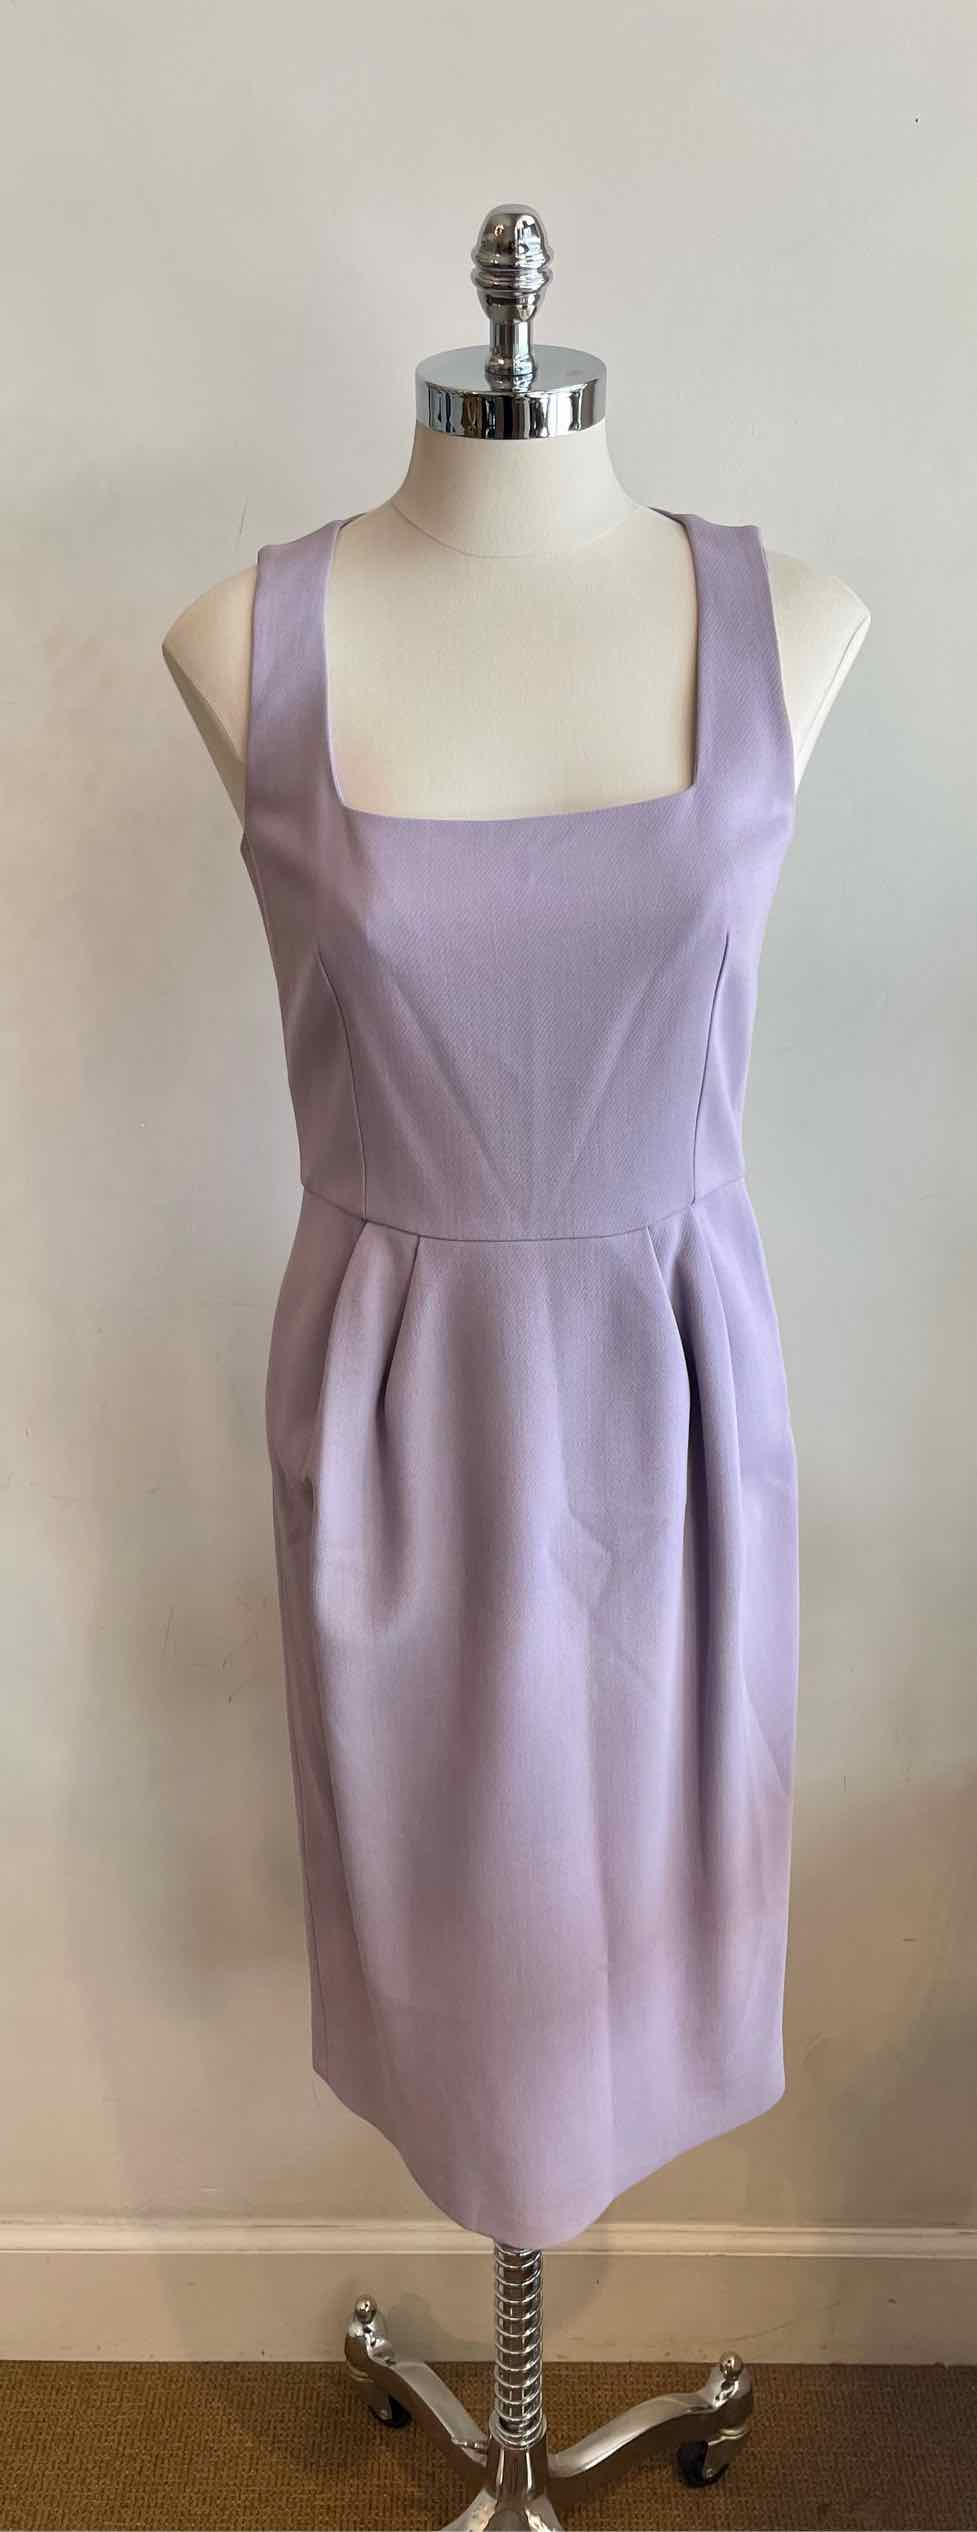 MICHAEL KORS Size 4 Lavender Wool Solid Dress